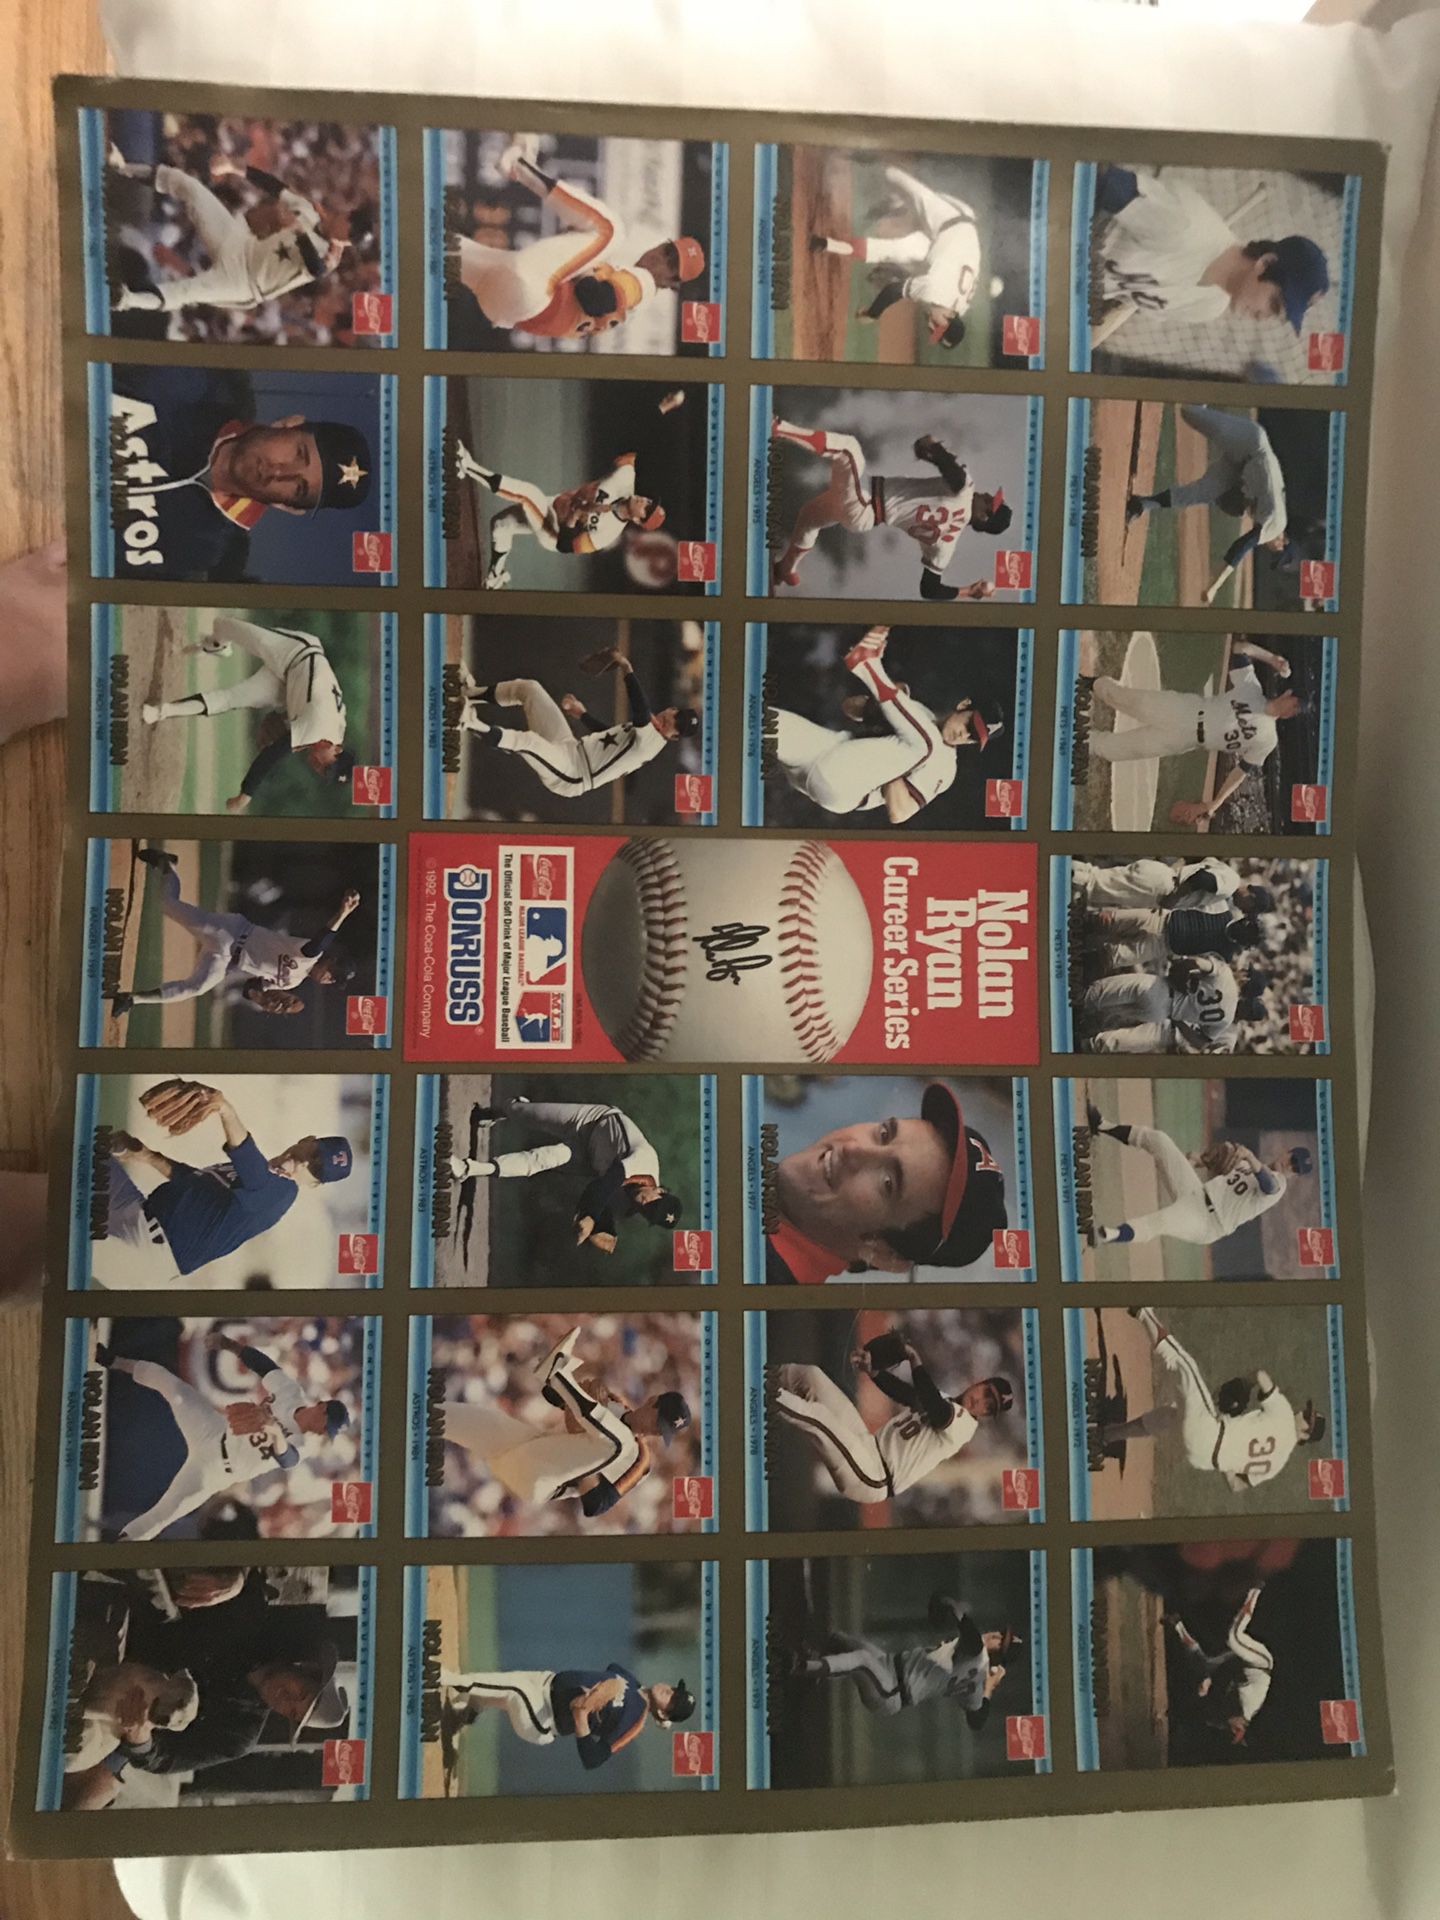 Nolan Ryan baseball card sales posters